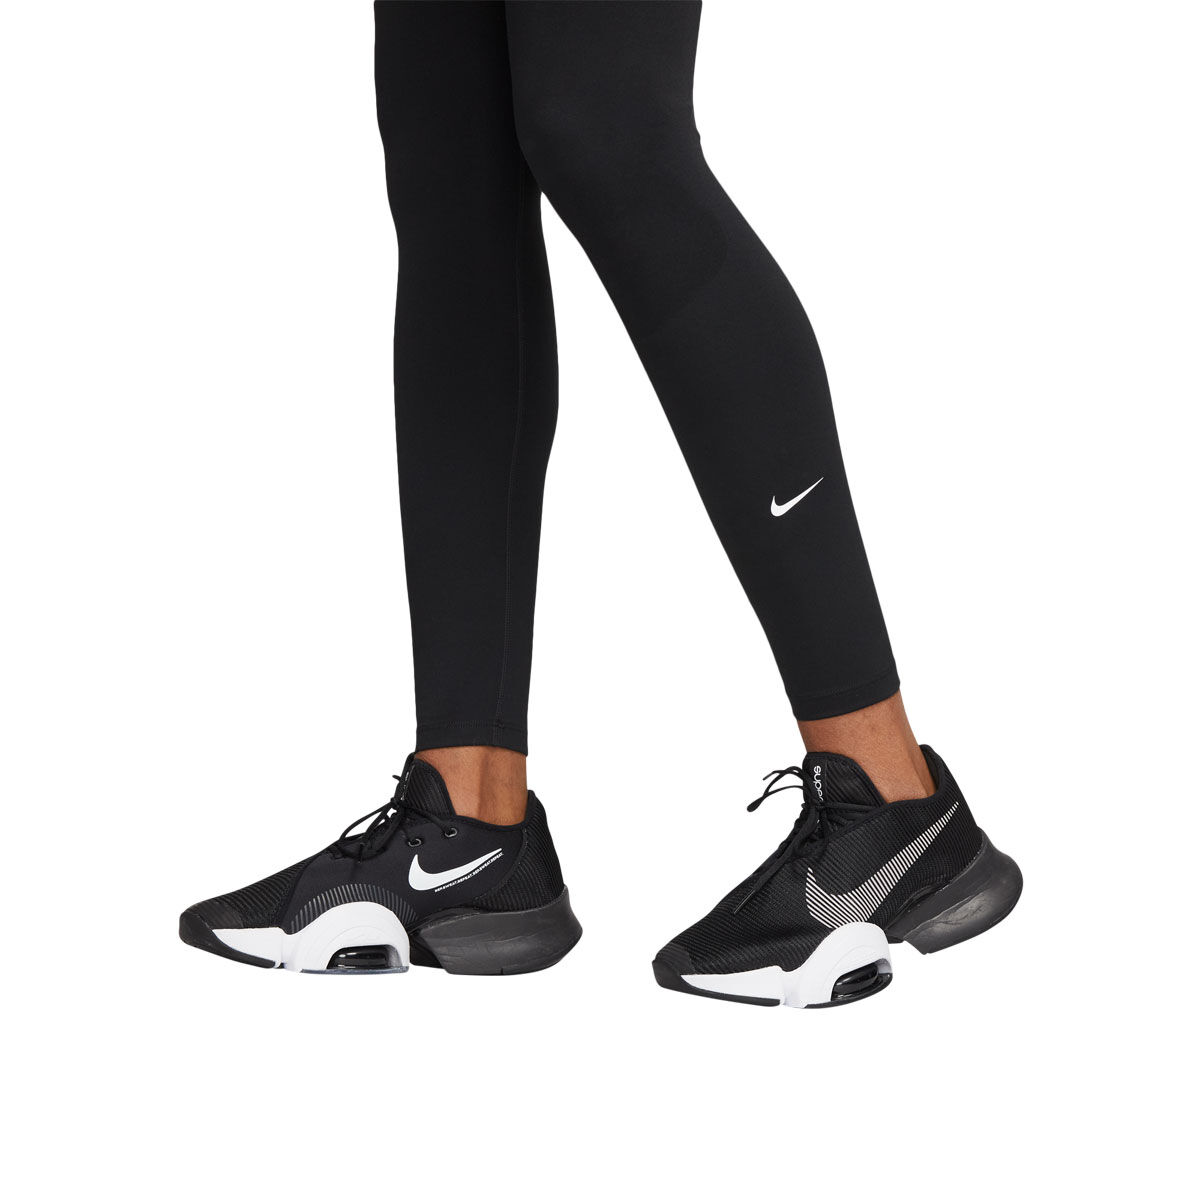 Nike leggings xl - Gem